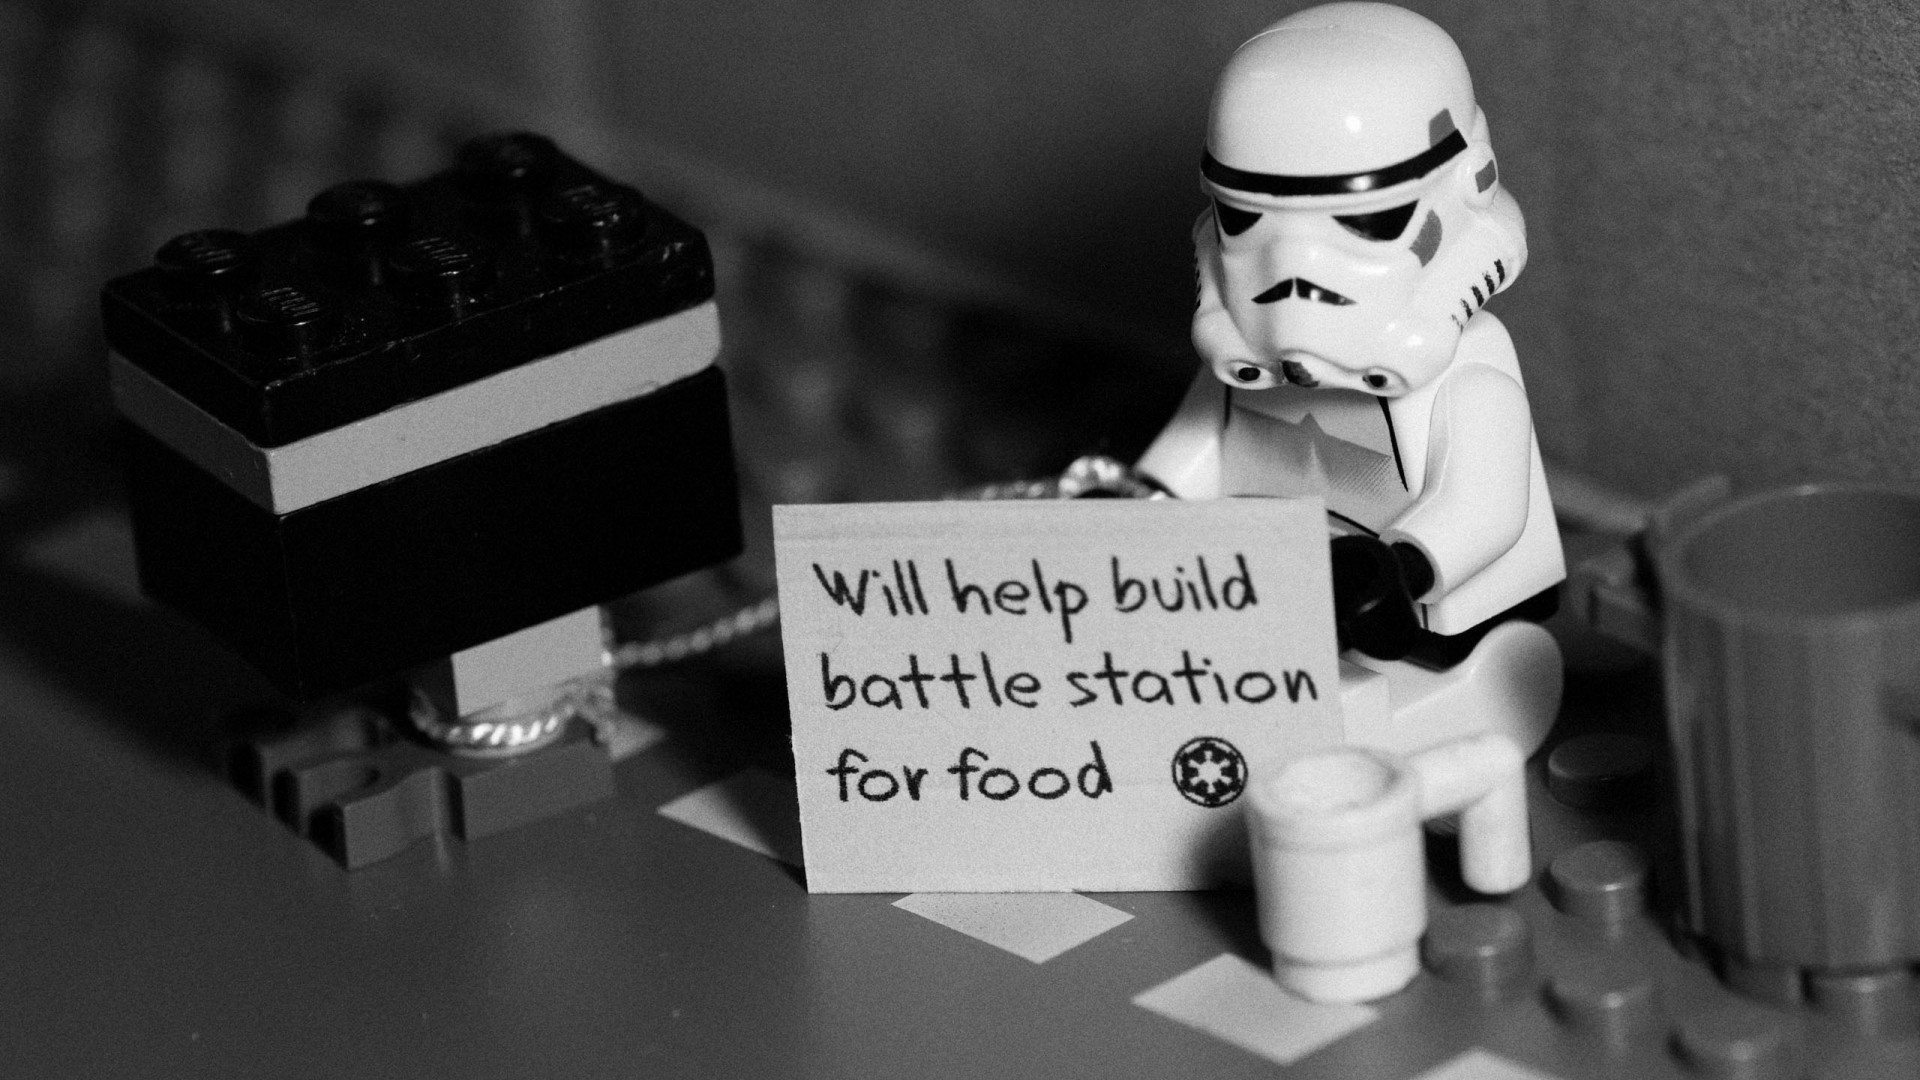 50 Lego Star Wars Wallpapers On Wallpapersafari Images, Photos, Reviews